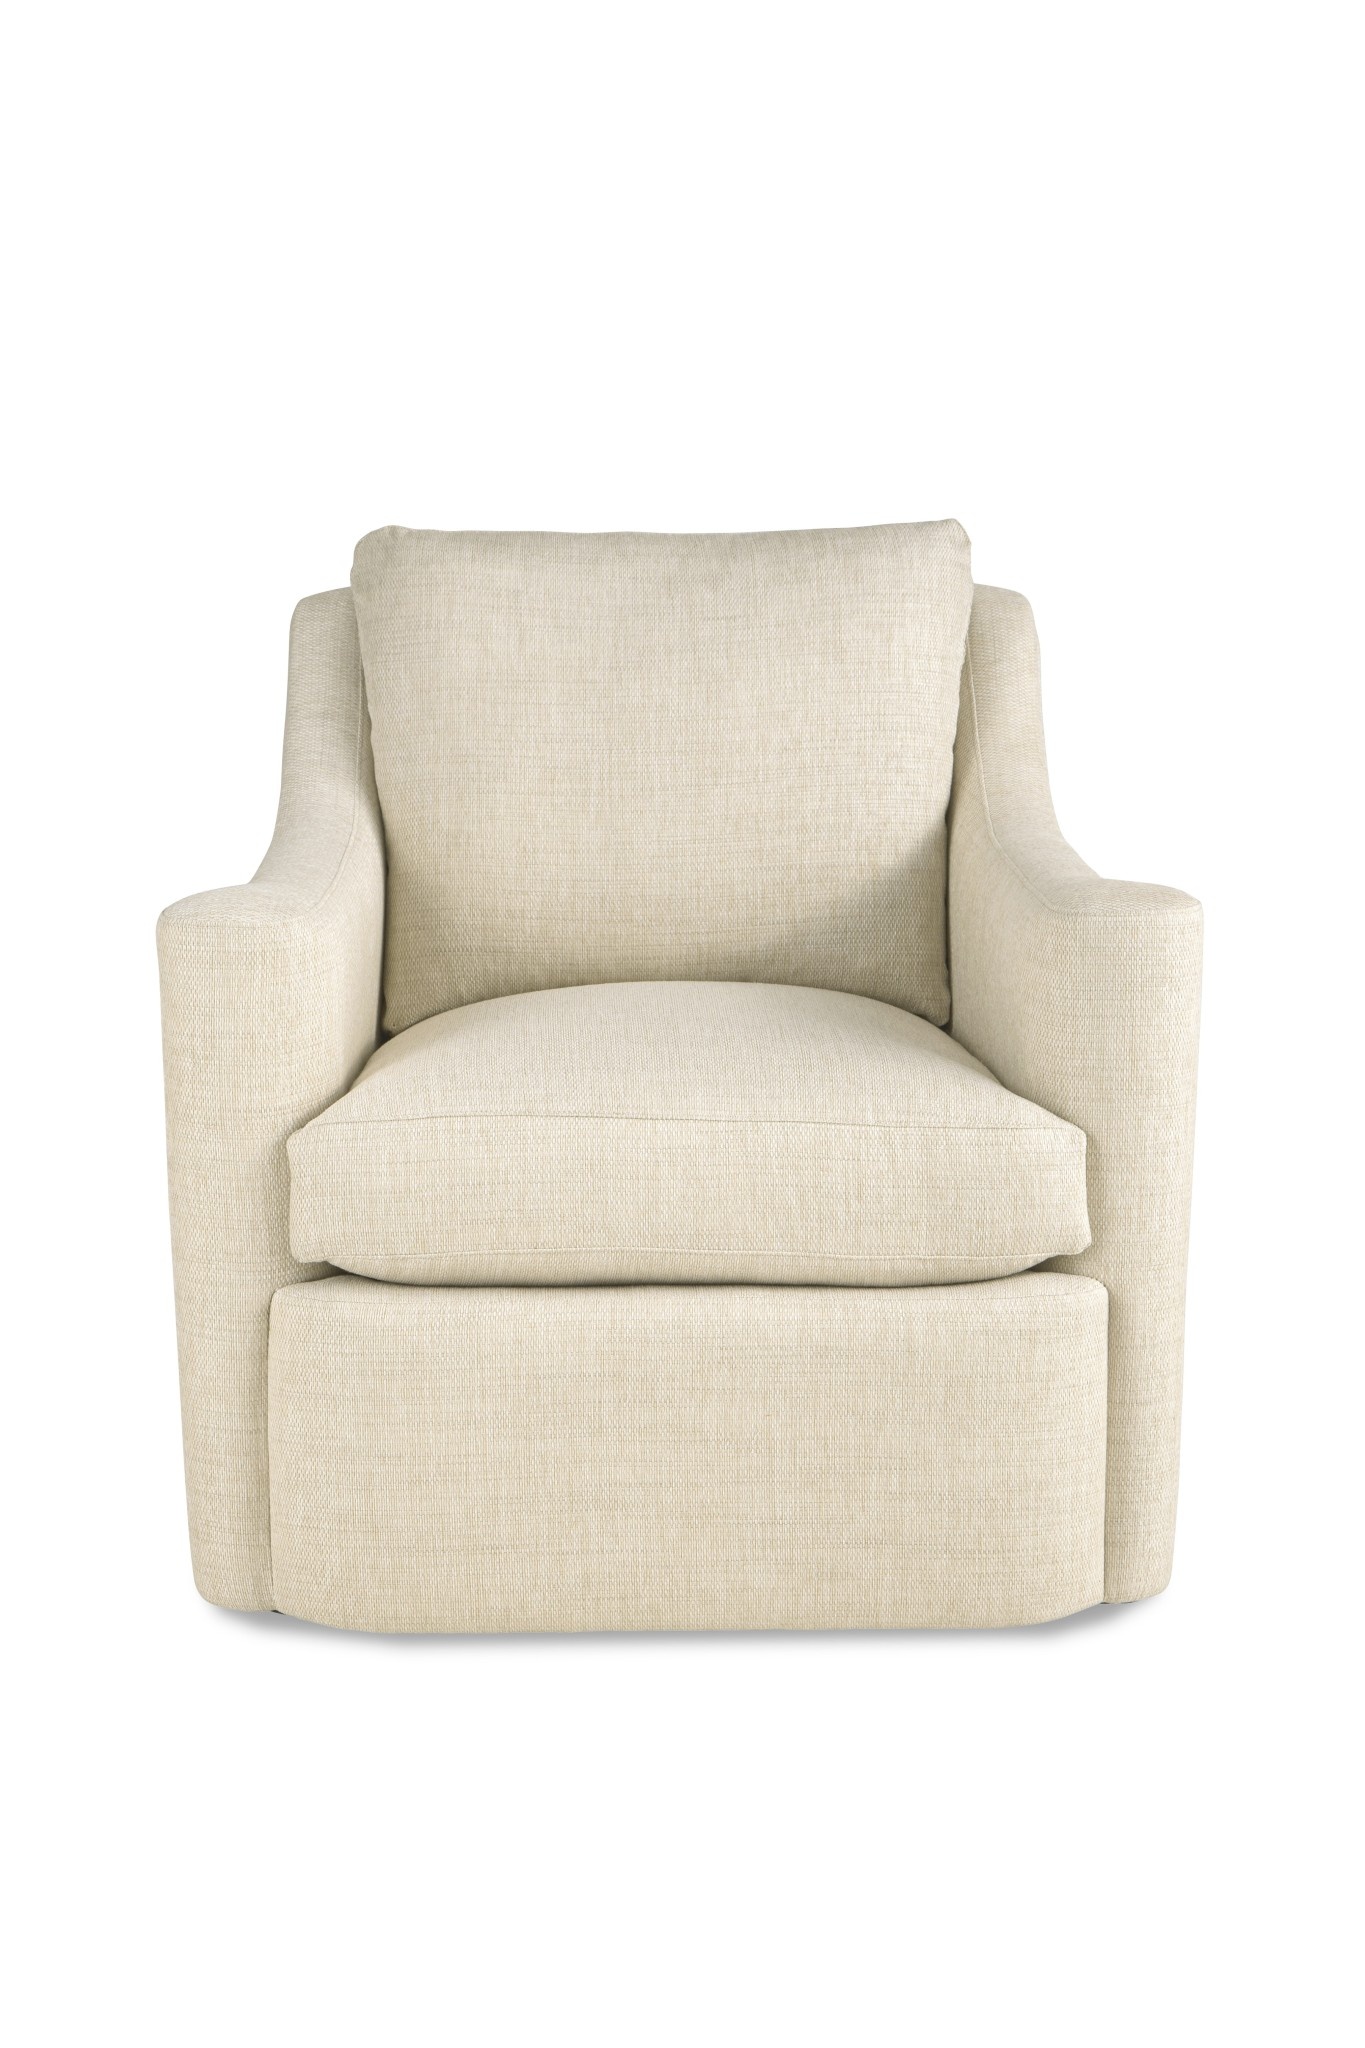 Craftmaster Furniture Swivel Chair